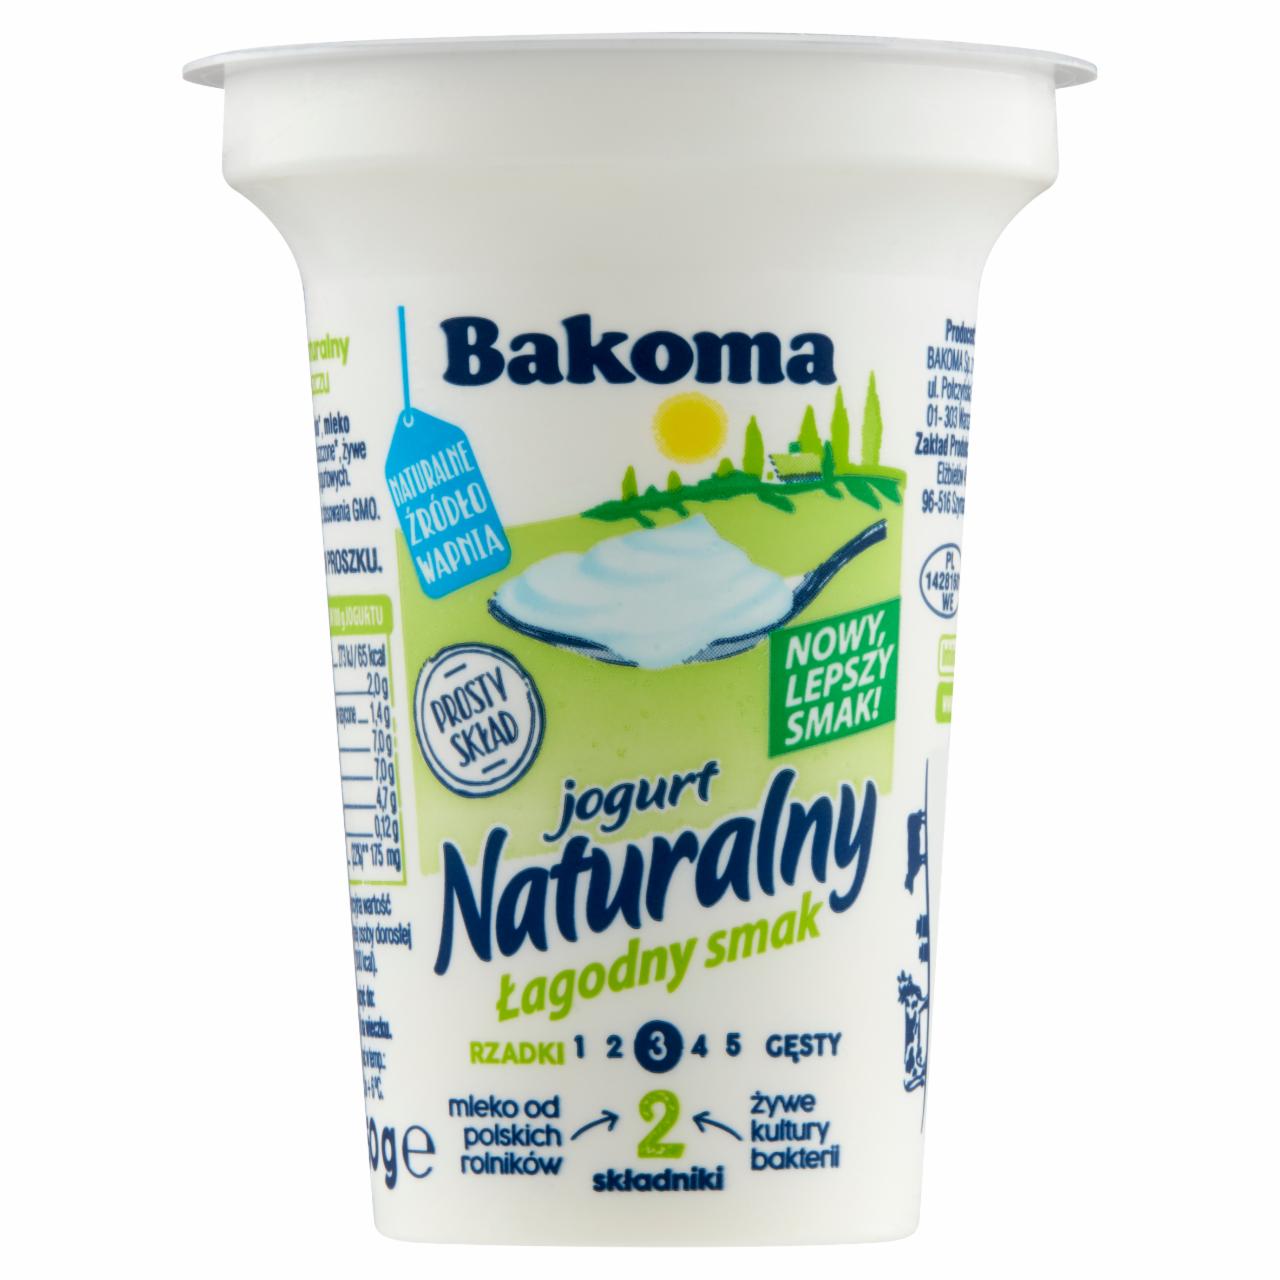 Zdjęcia - Bakoma Jogurt naturalny łagodny smak 150 g 